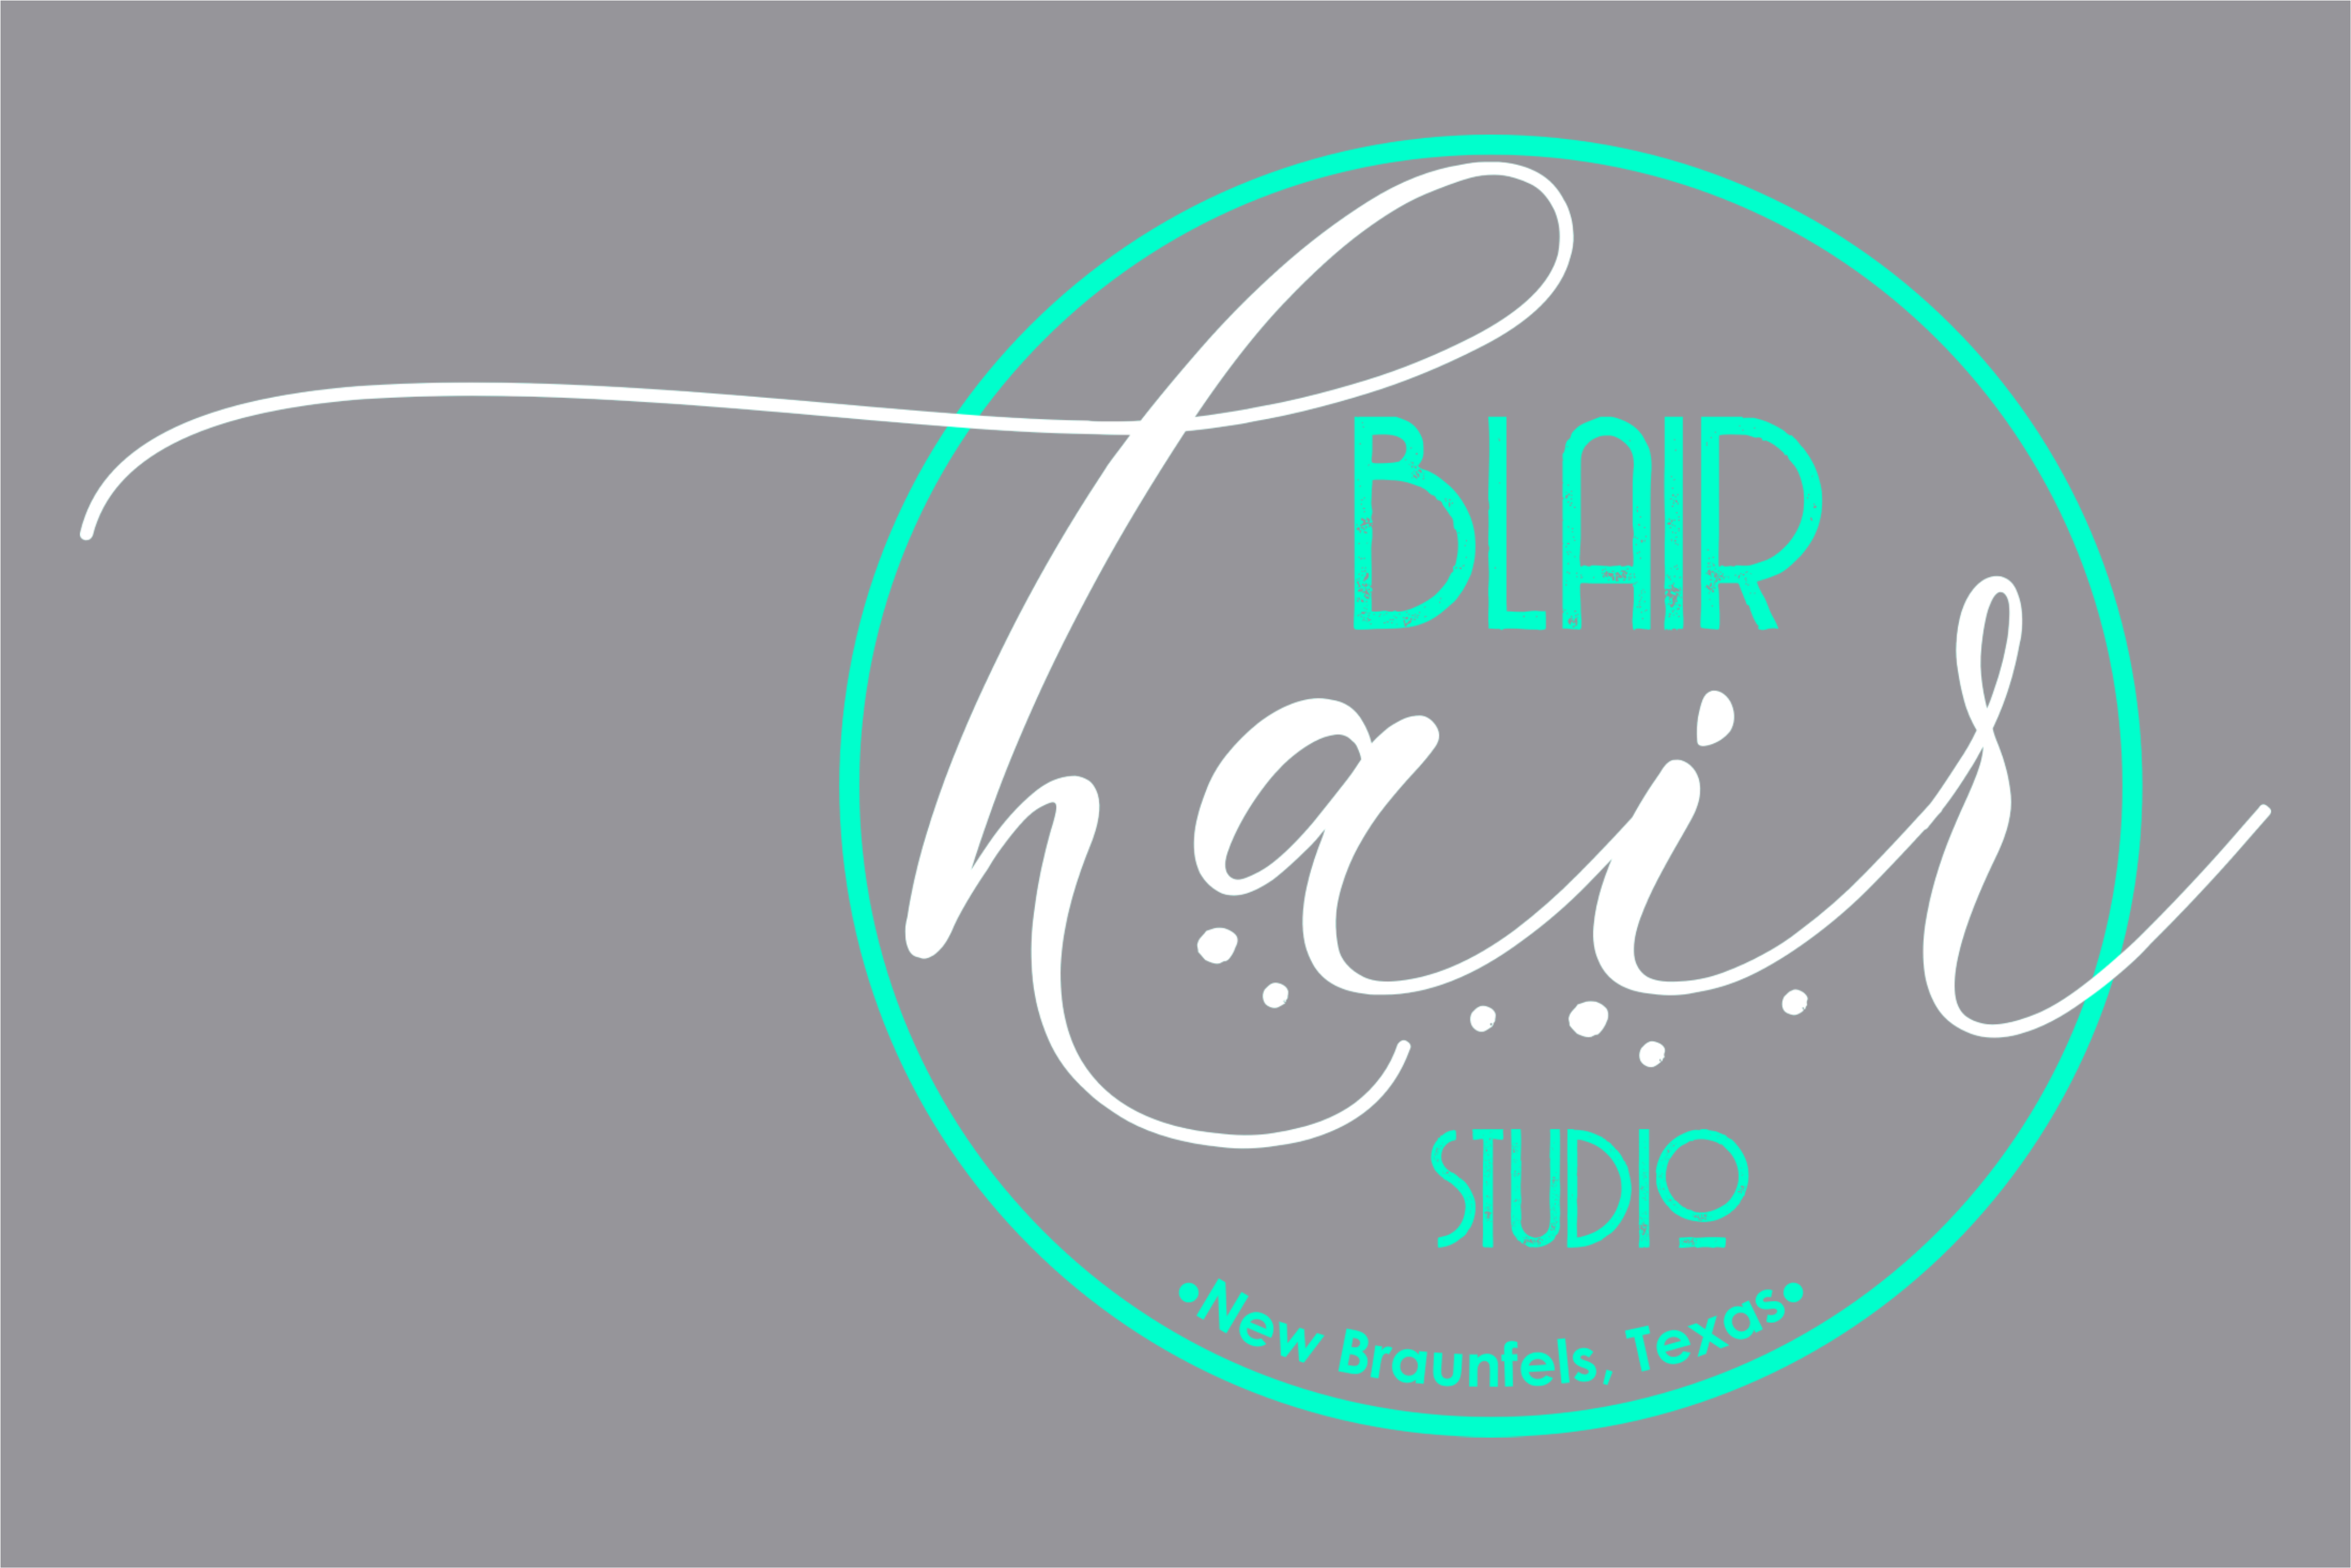 Blair Hair Studio